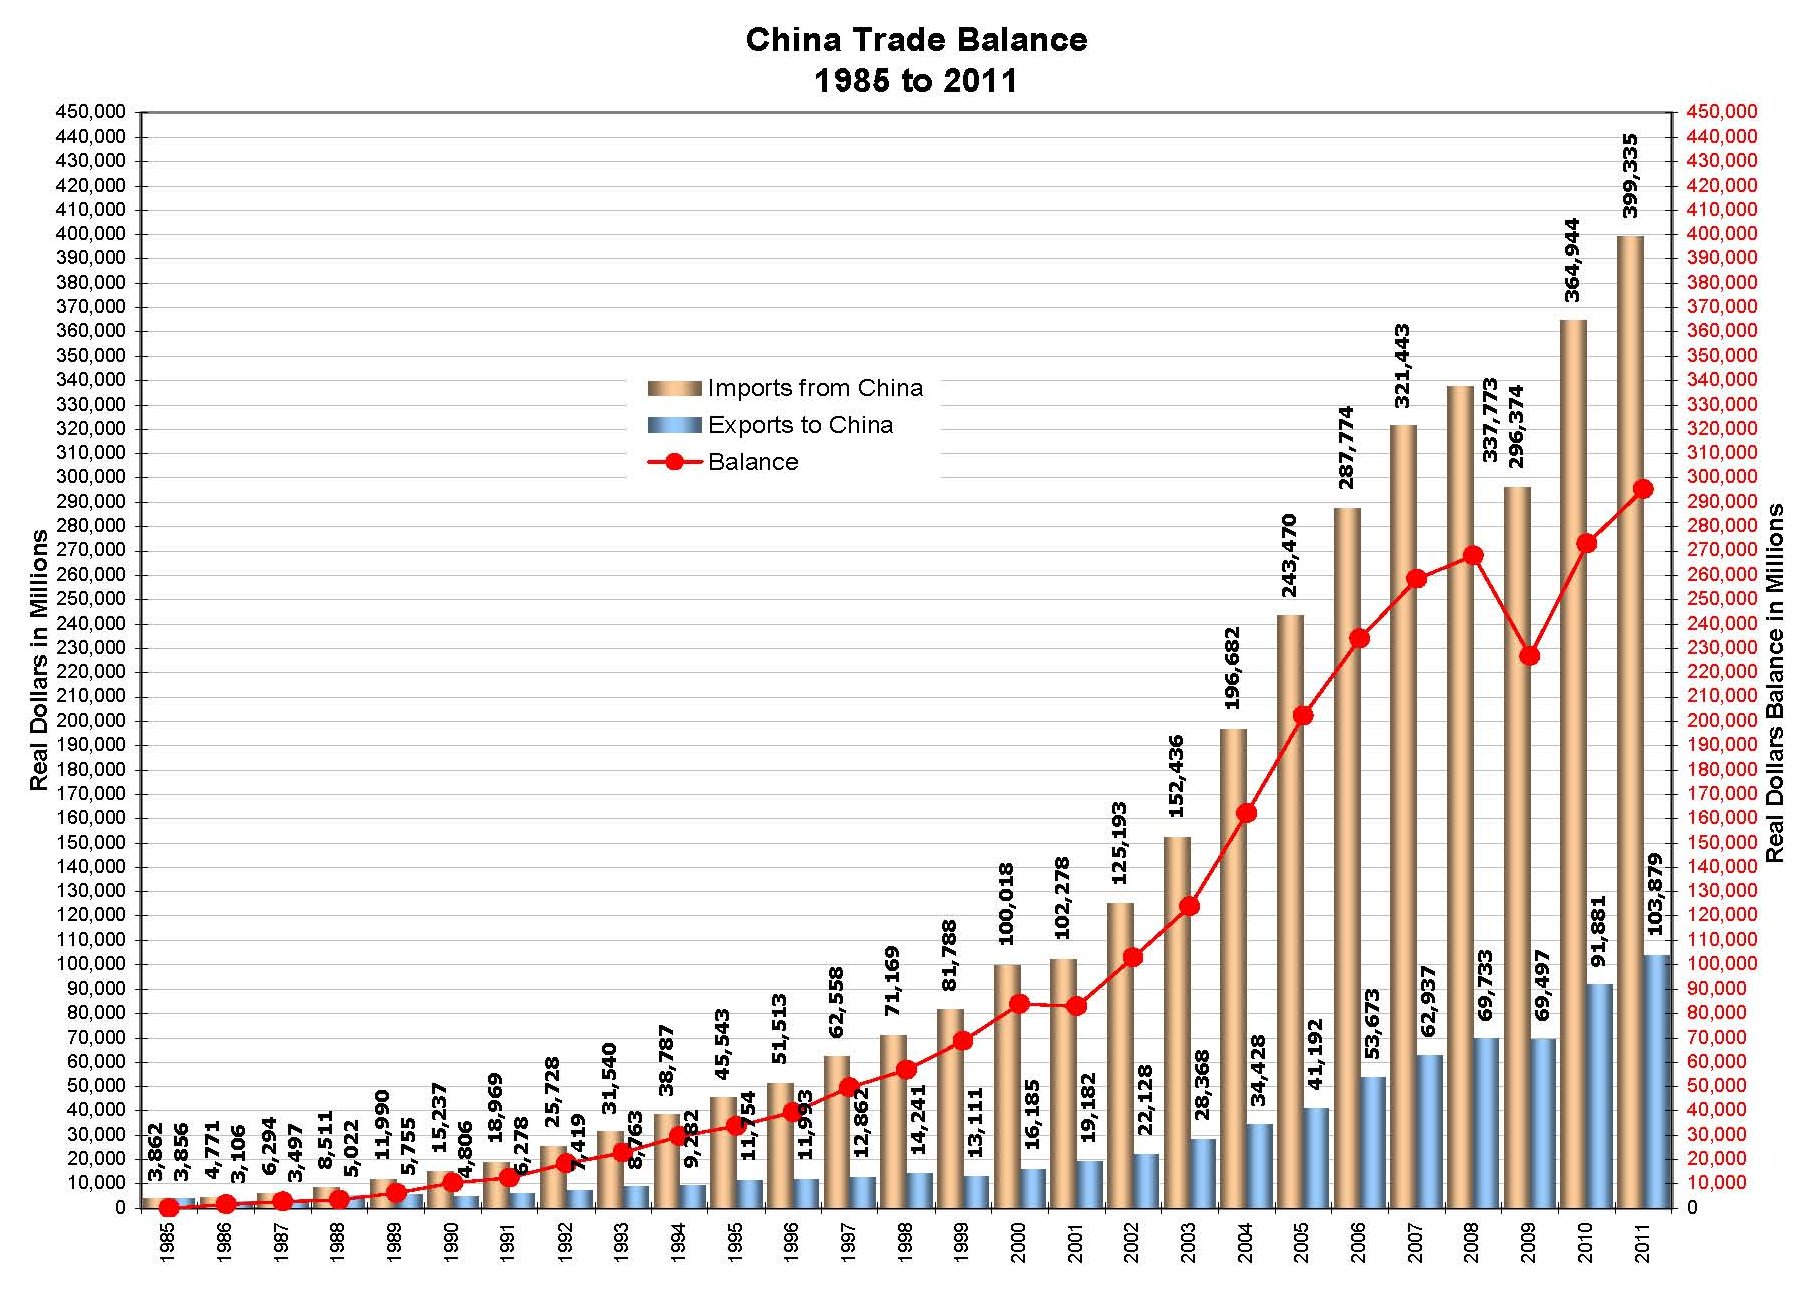 U.S. Global trade balance from 1985 - 2011